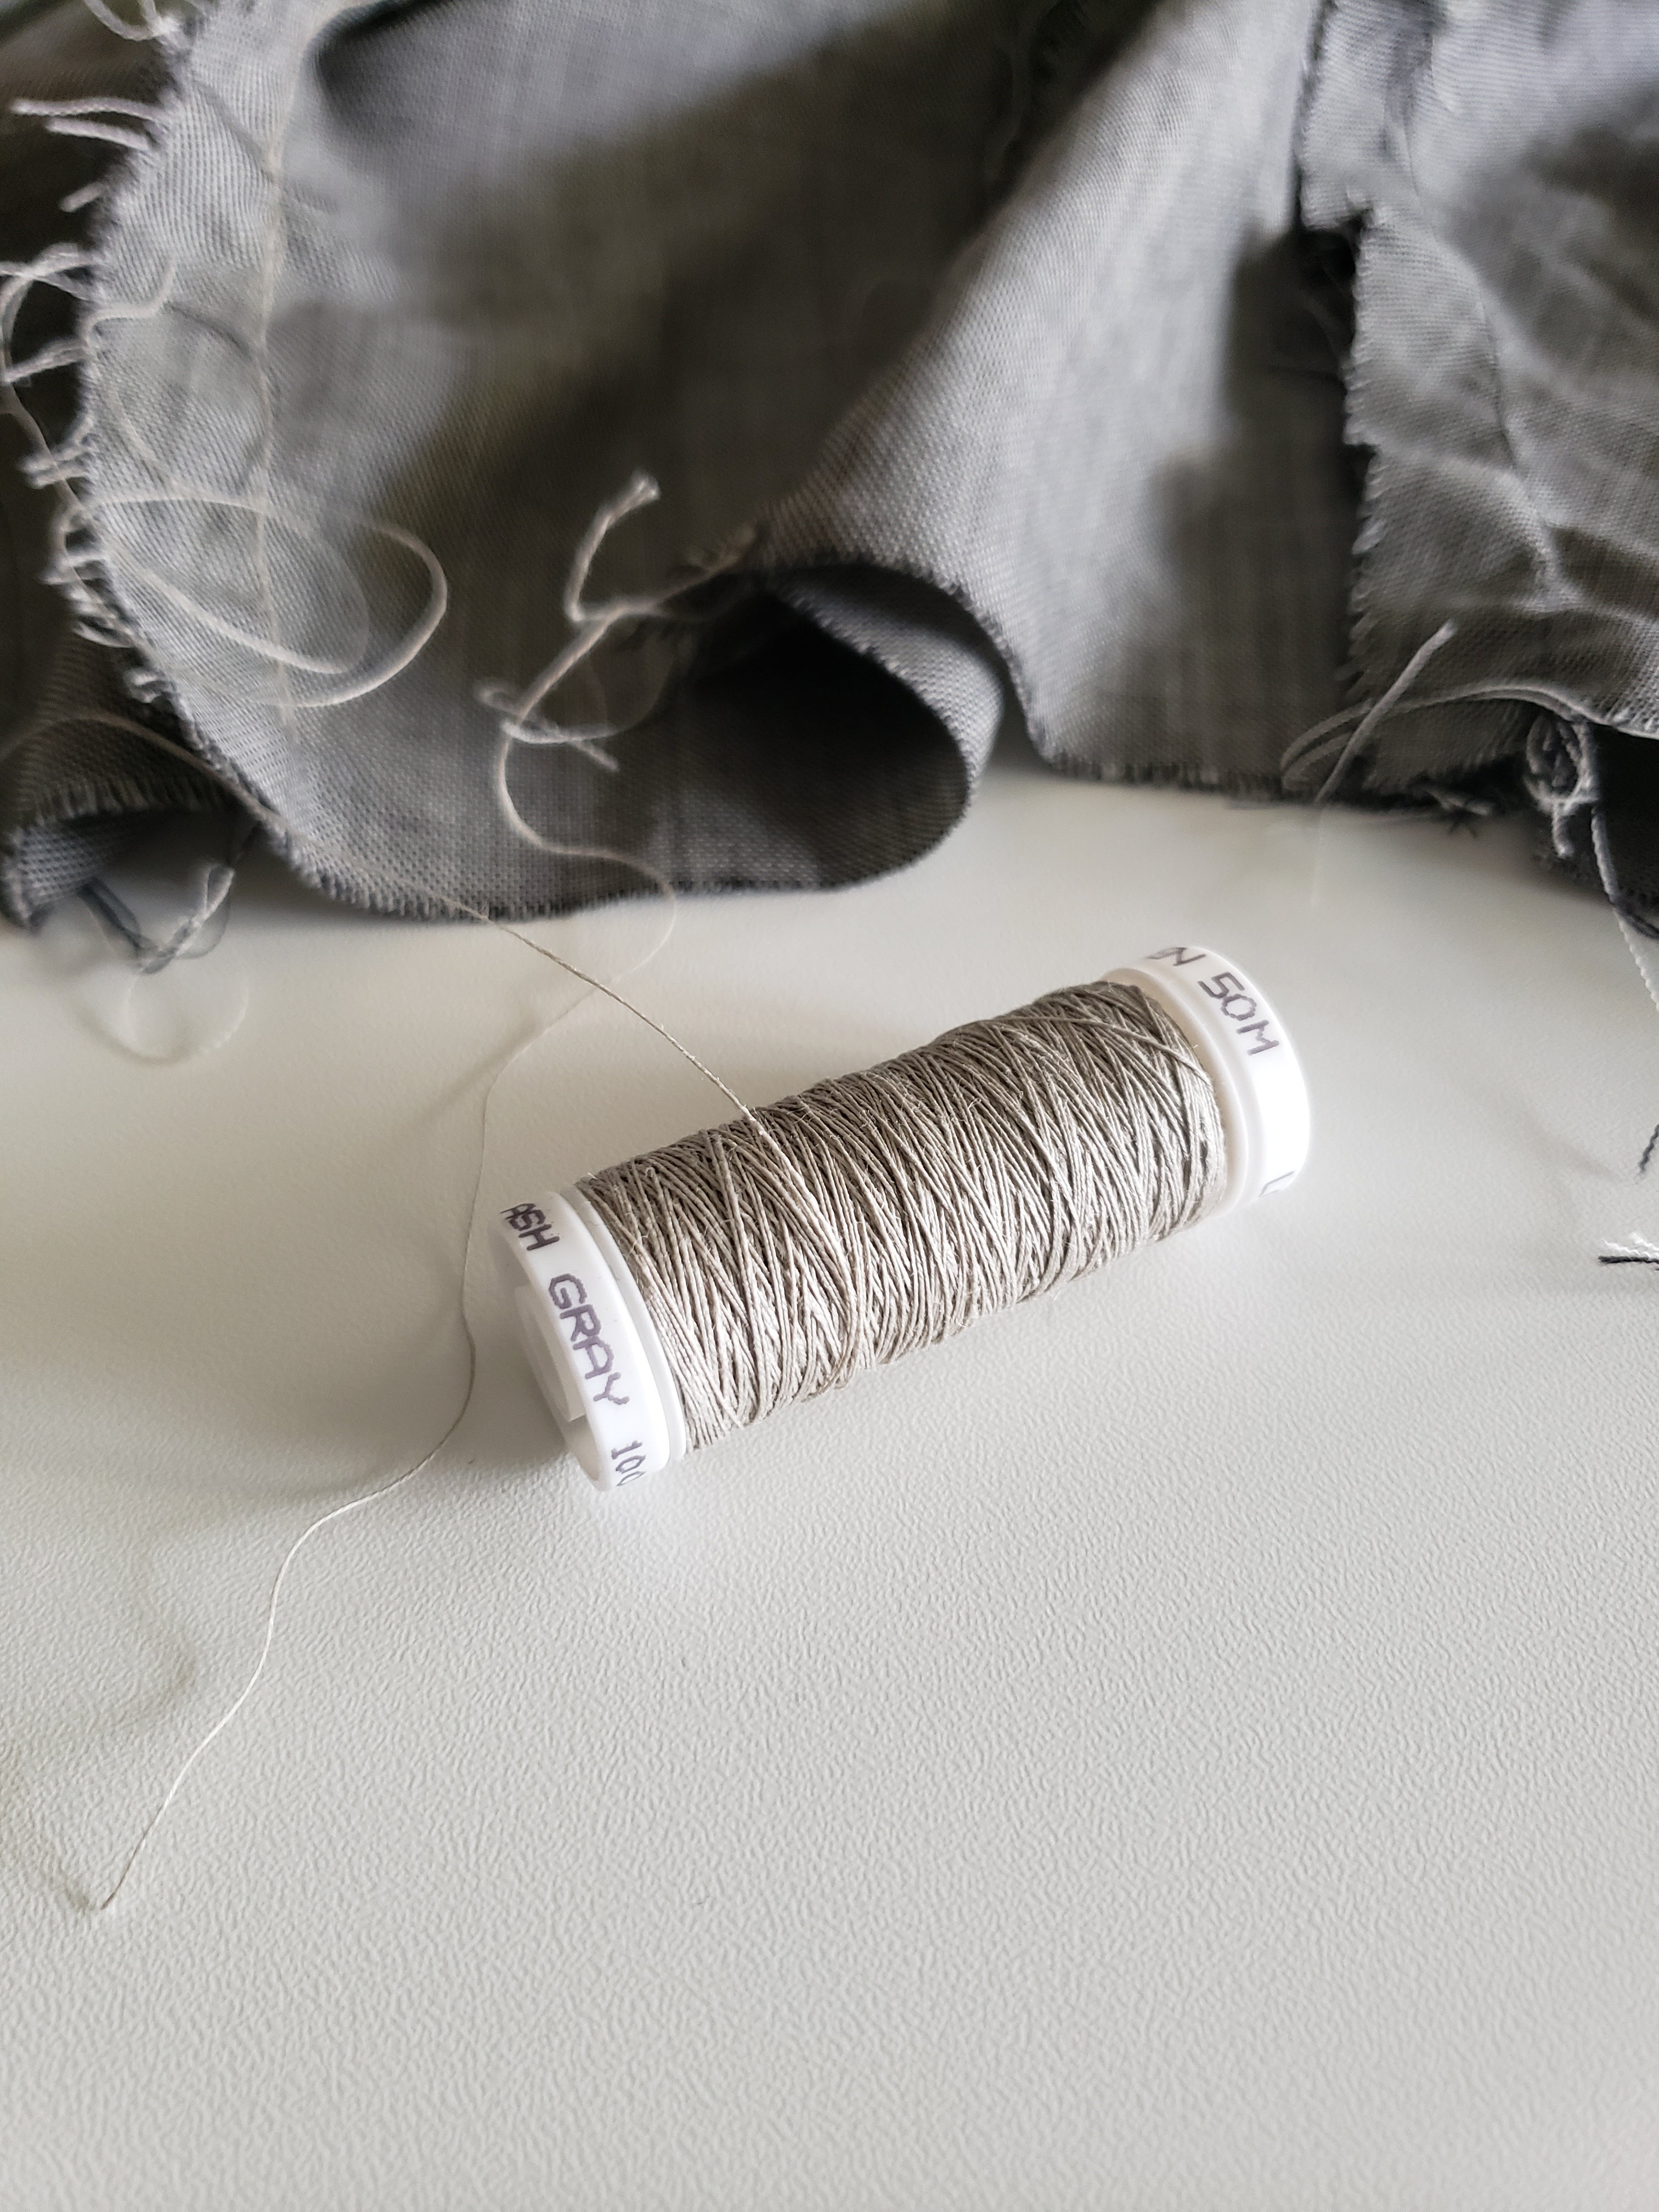 Washed Linen Fabric  UK's Best Price Guarantee! – Pound Fabrics